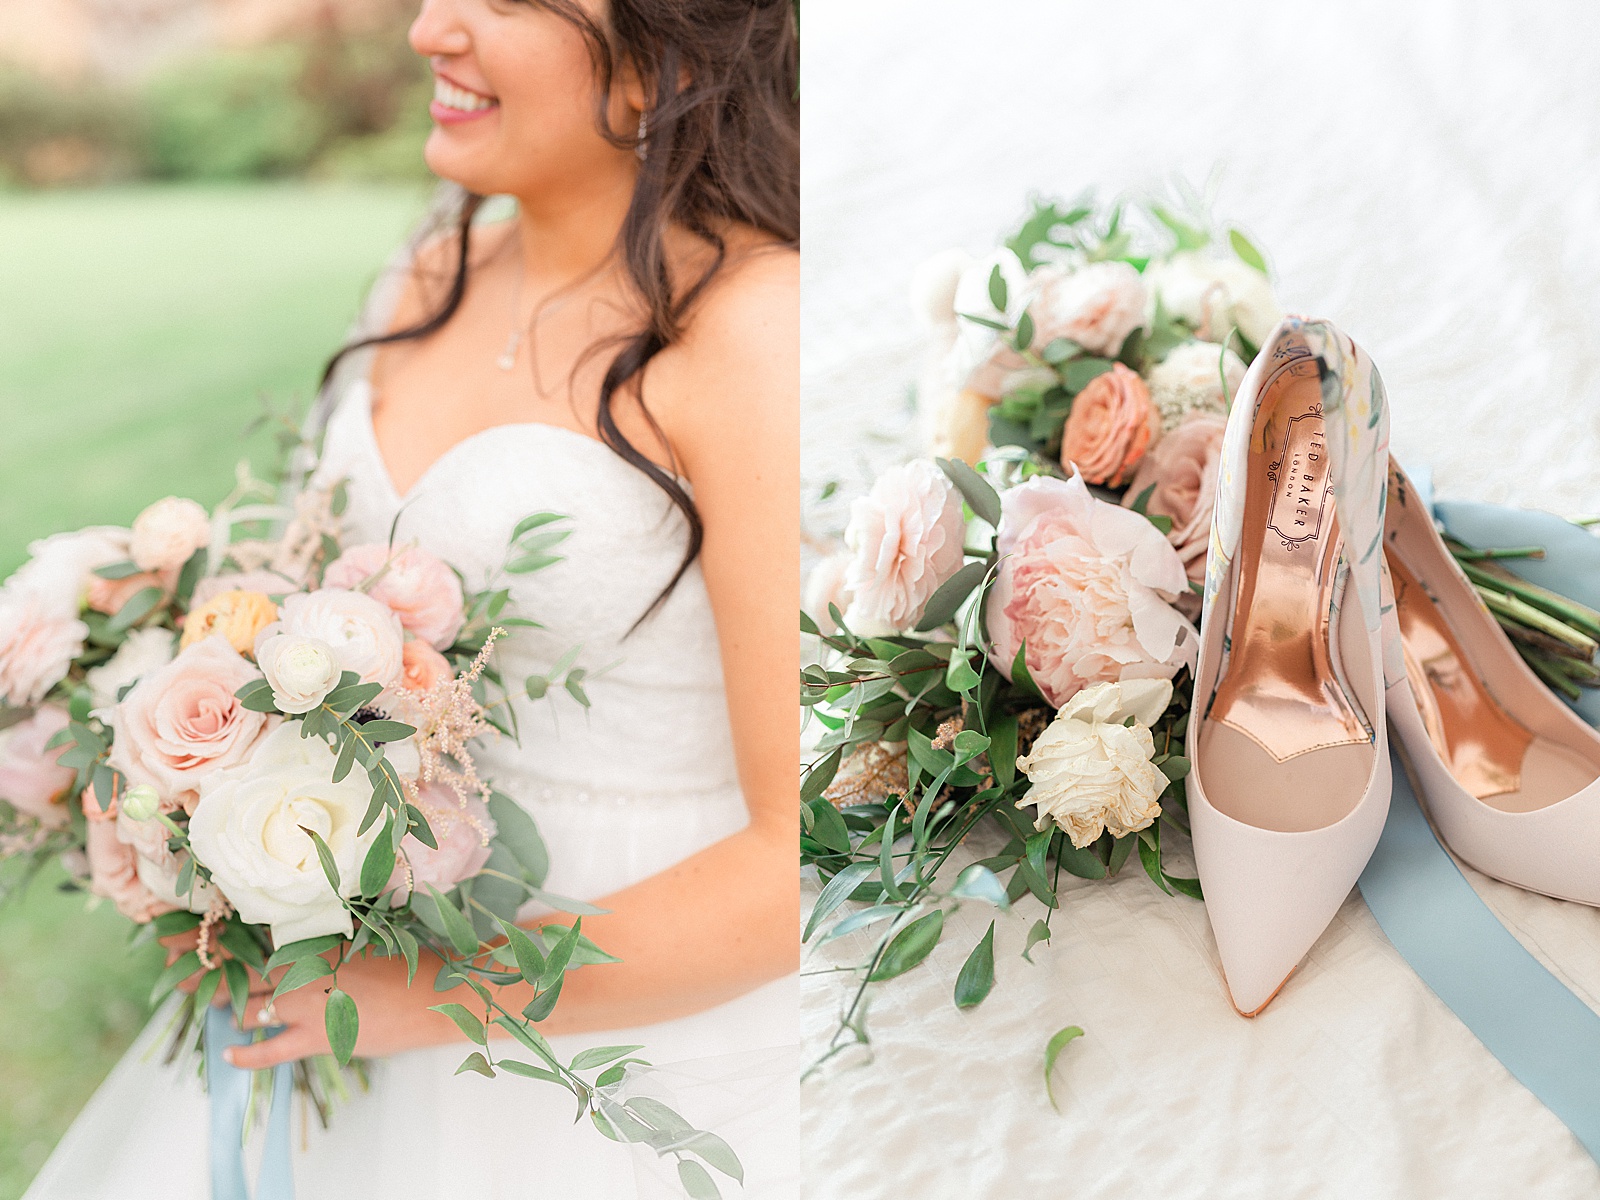 Bride's flower bouquet and shoes